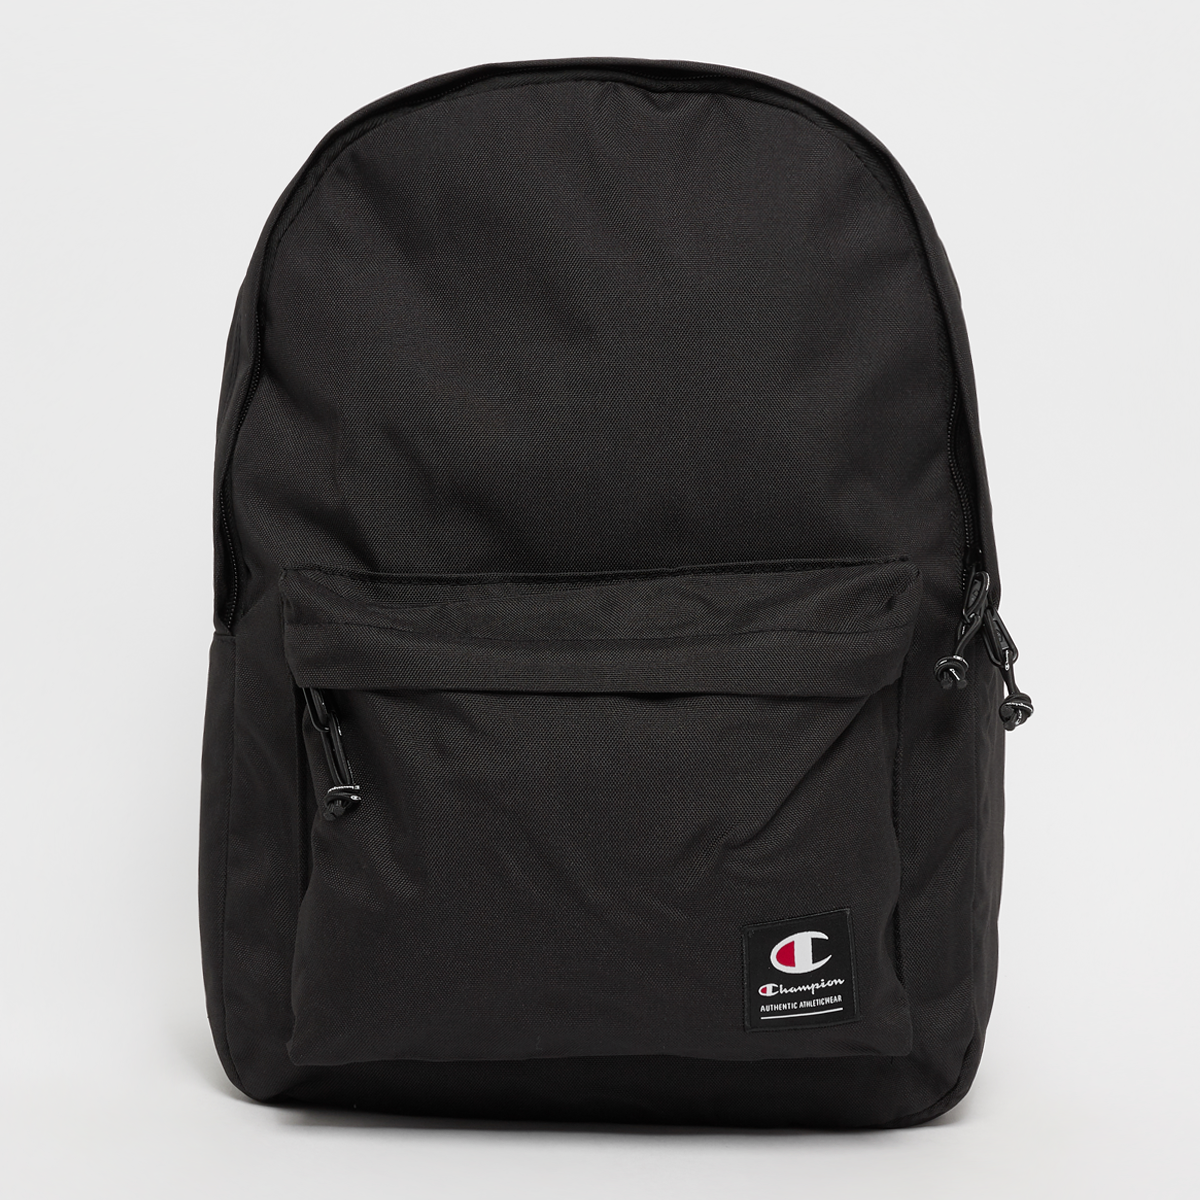 Lifstyle Bag Backpack